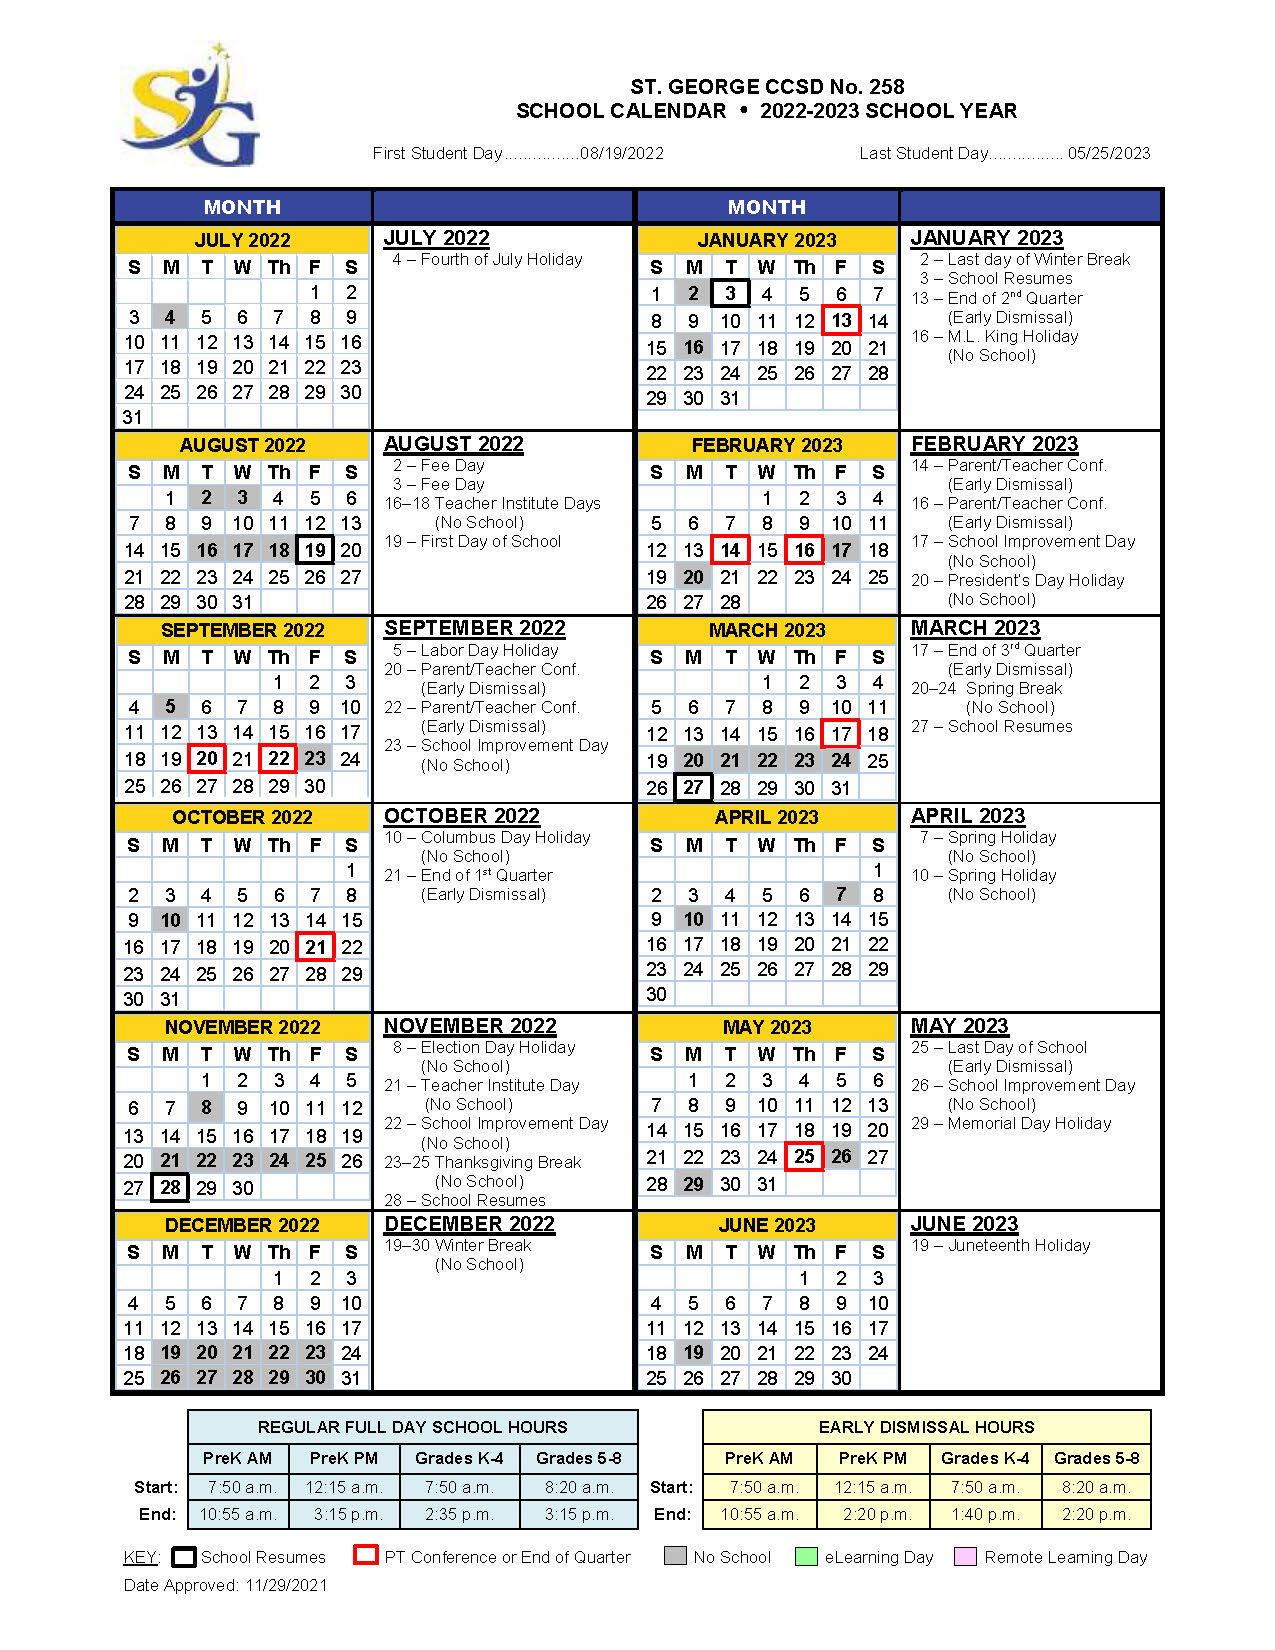 District Calendar | District